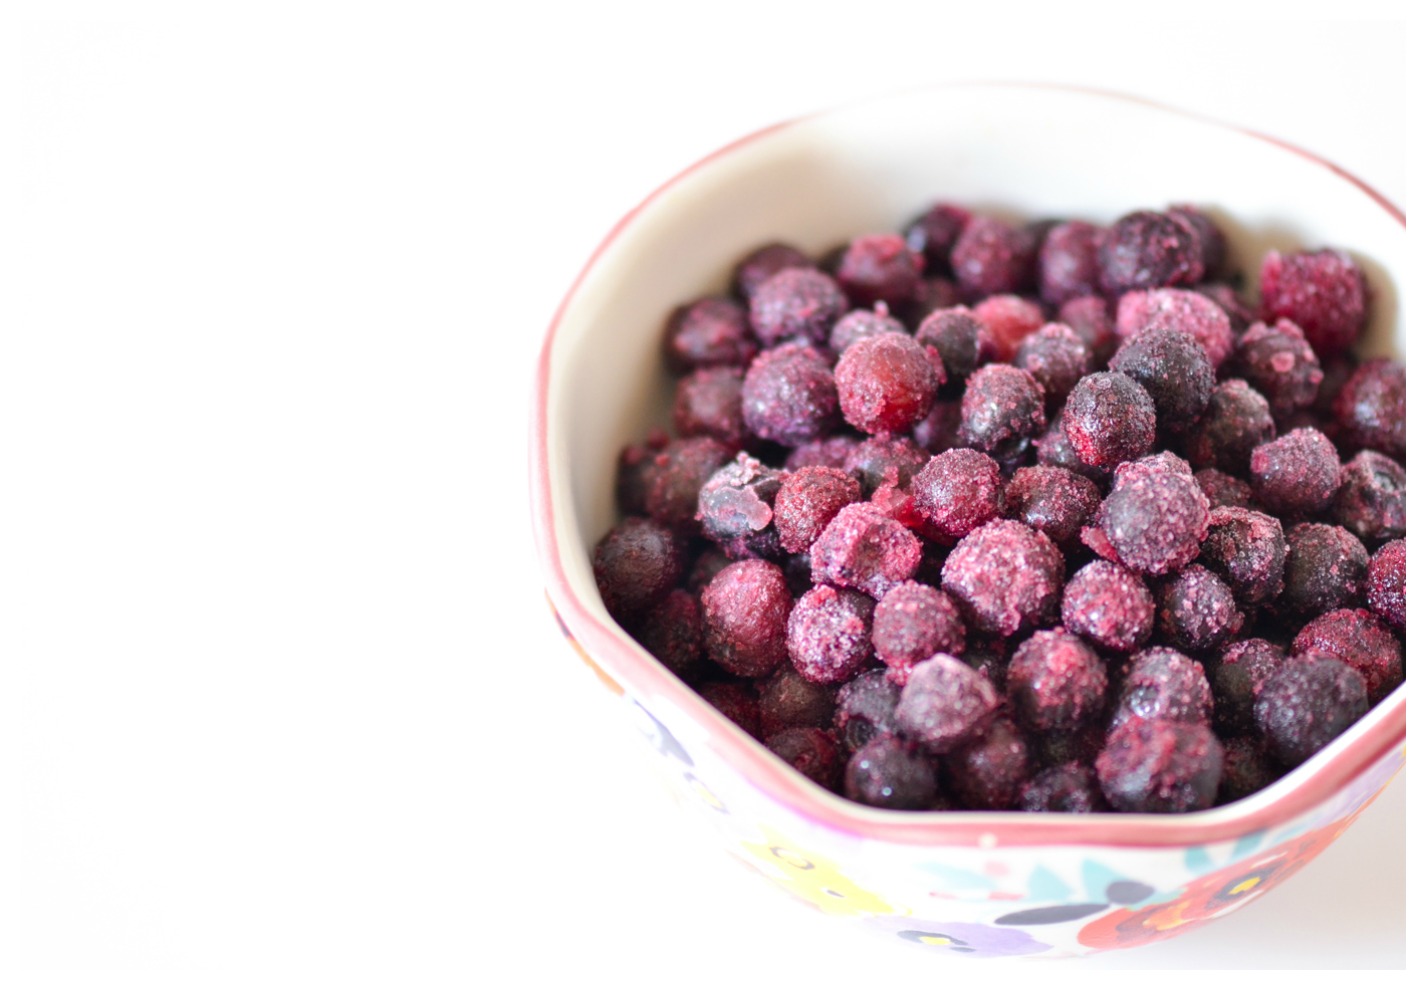 A cute little bowl of frozen blueberries